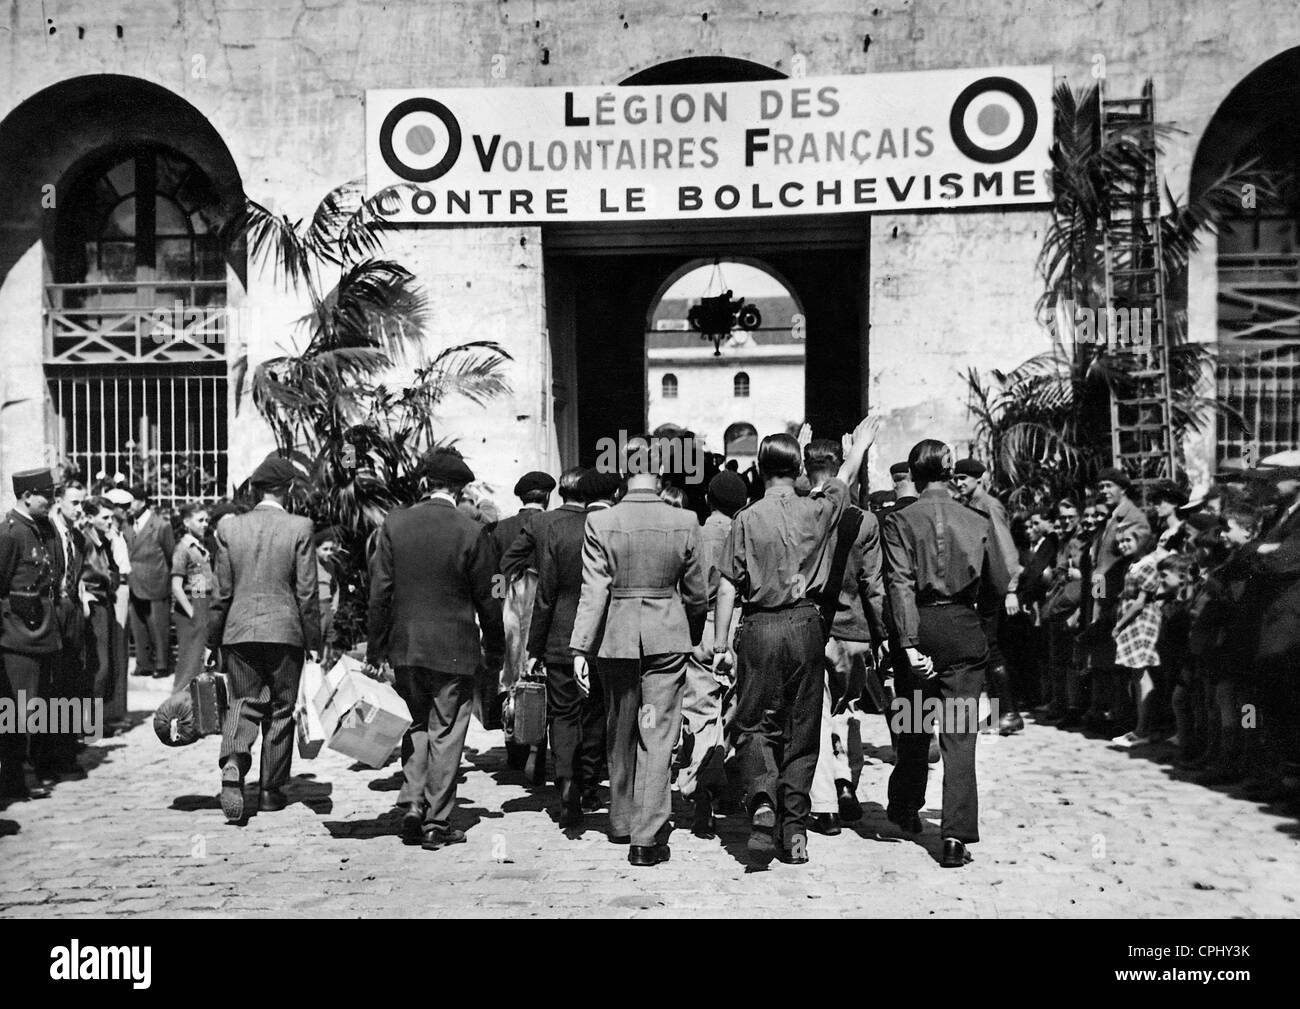 Volunteers of the Legion des Volontaires Francais, 1941 Stock Photo